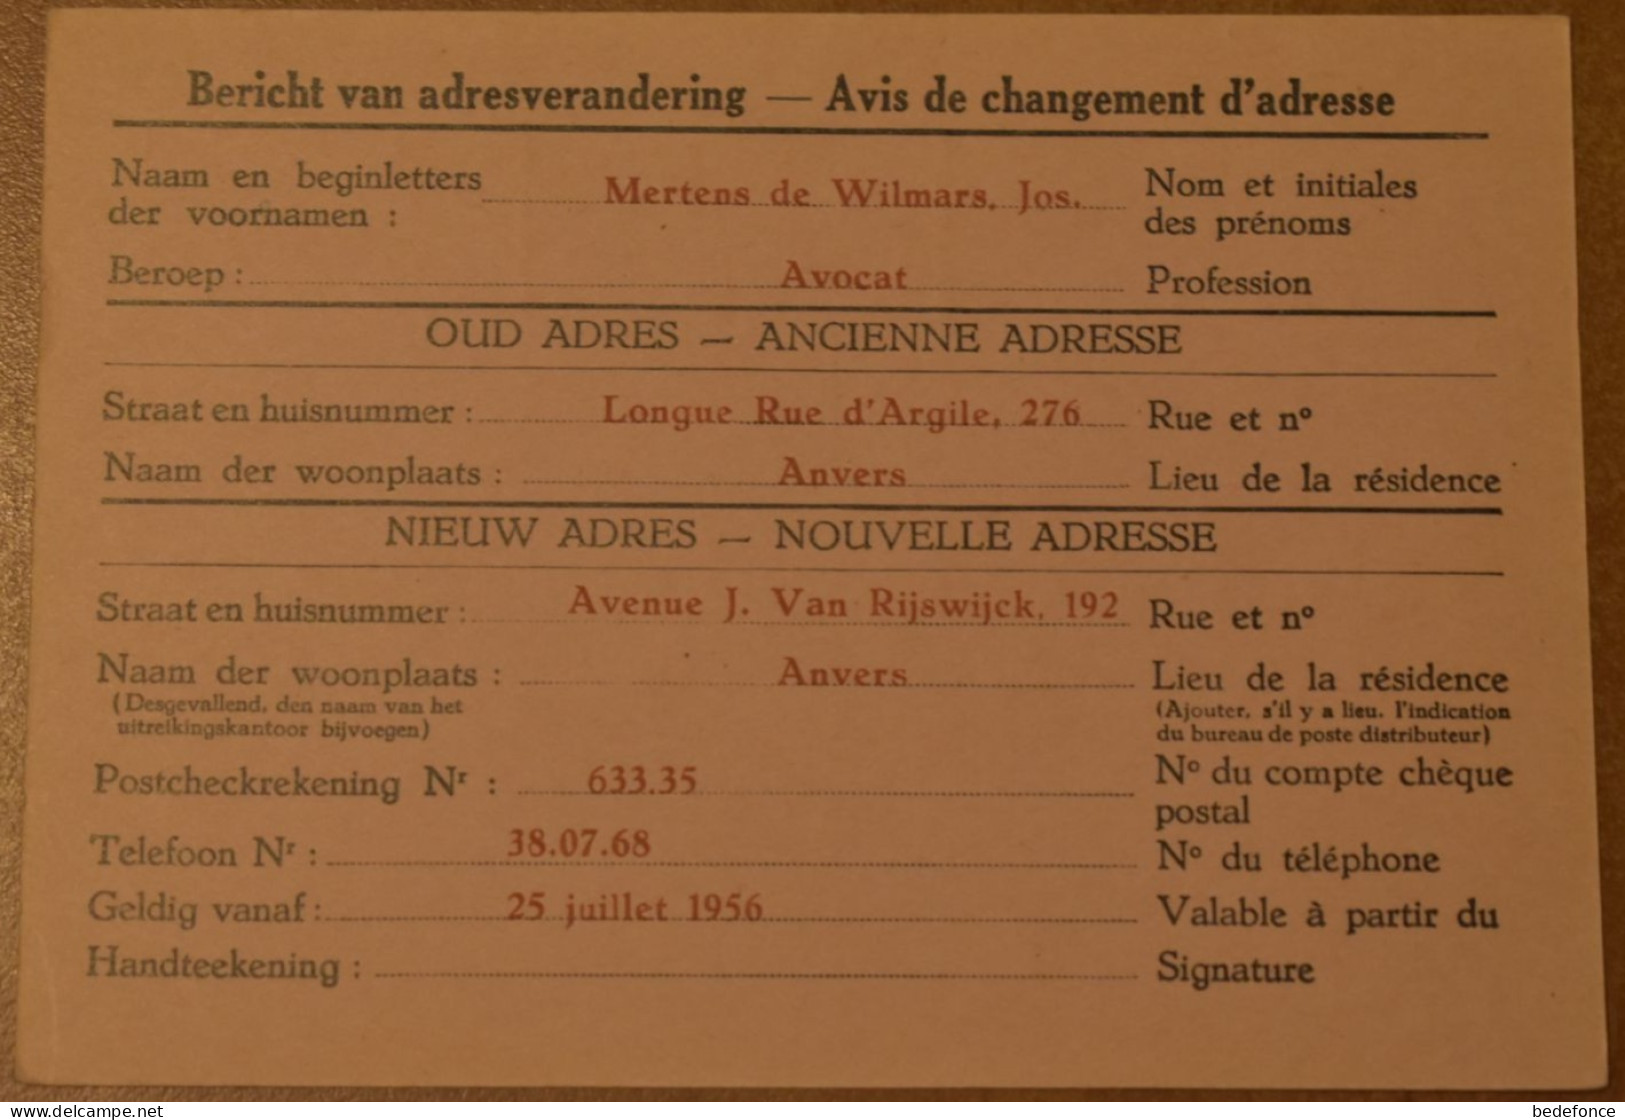 Belgique - Avis Changement Adresse - Prétimbrée - 20 C - Lion - Circulé En 1956 - Flamme "Drink Meer Melk" - Avviso Cambiamento Indirizzo